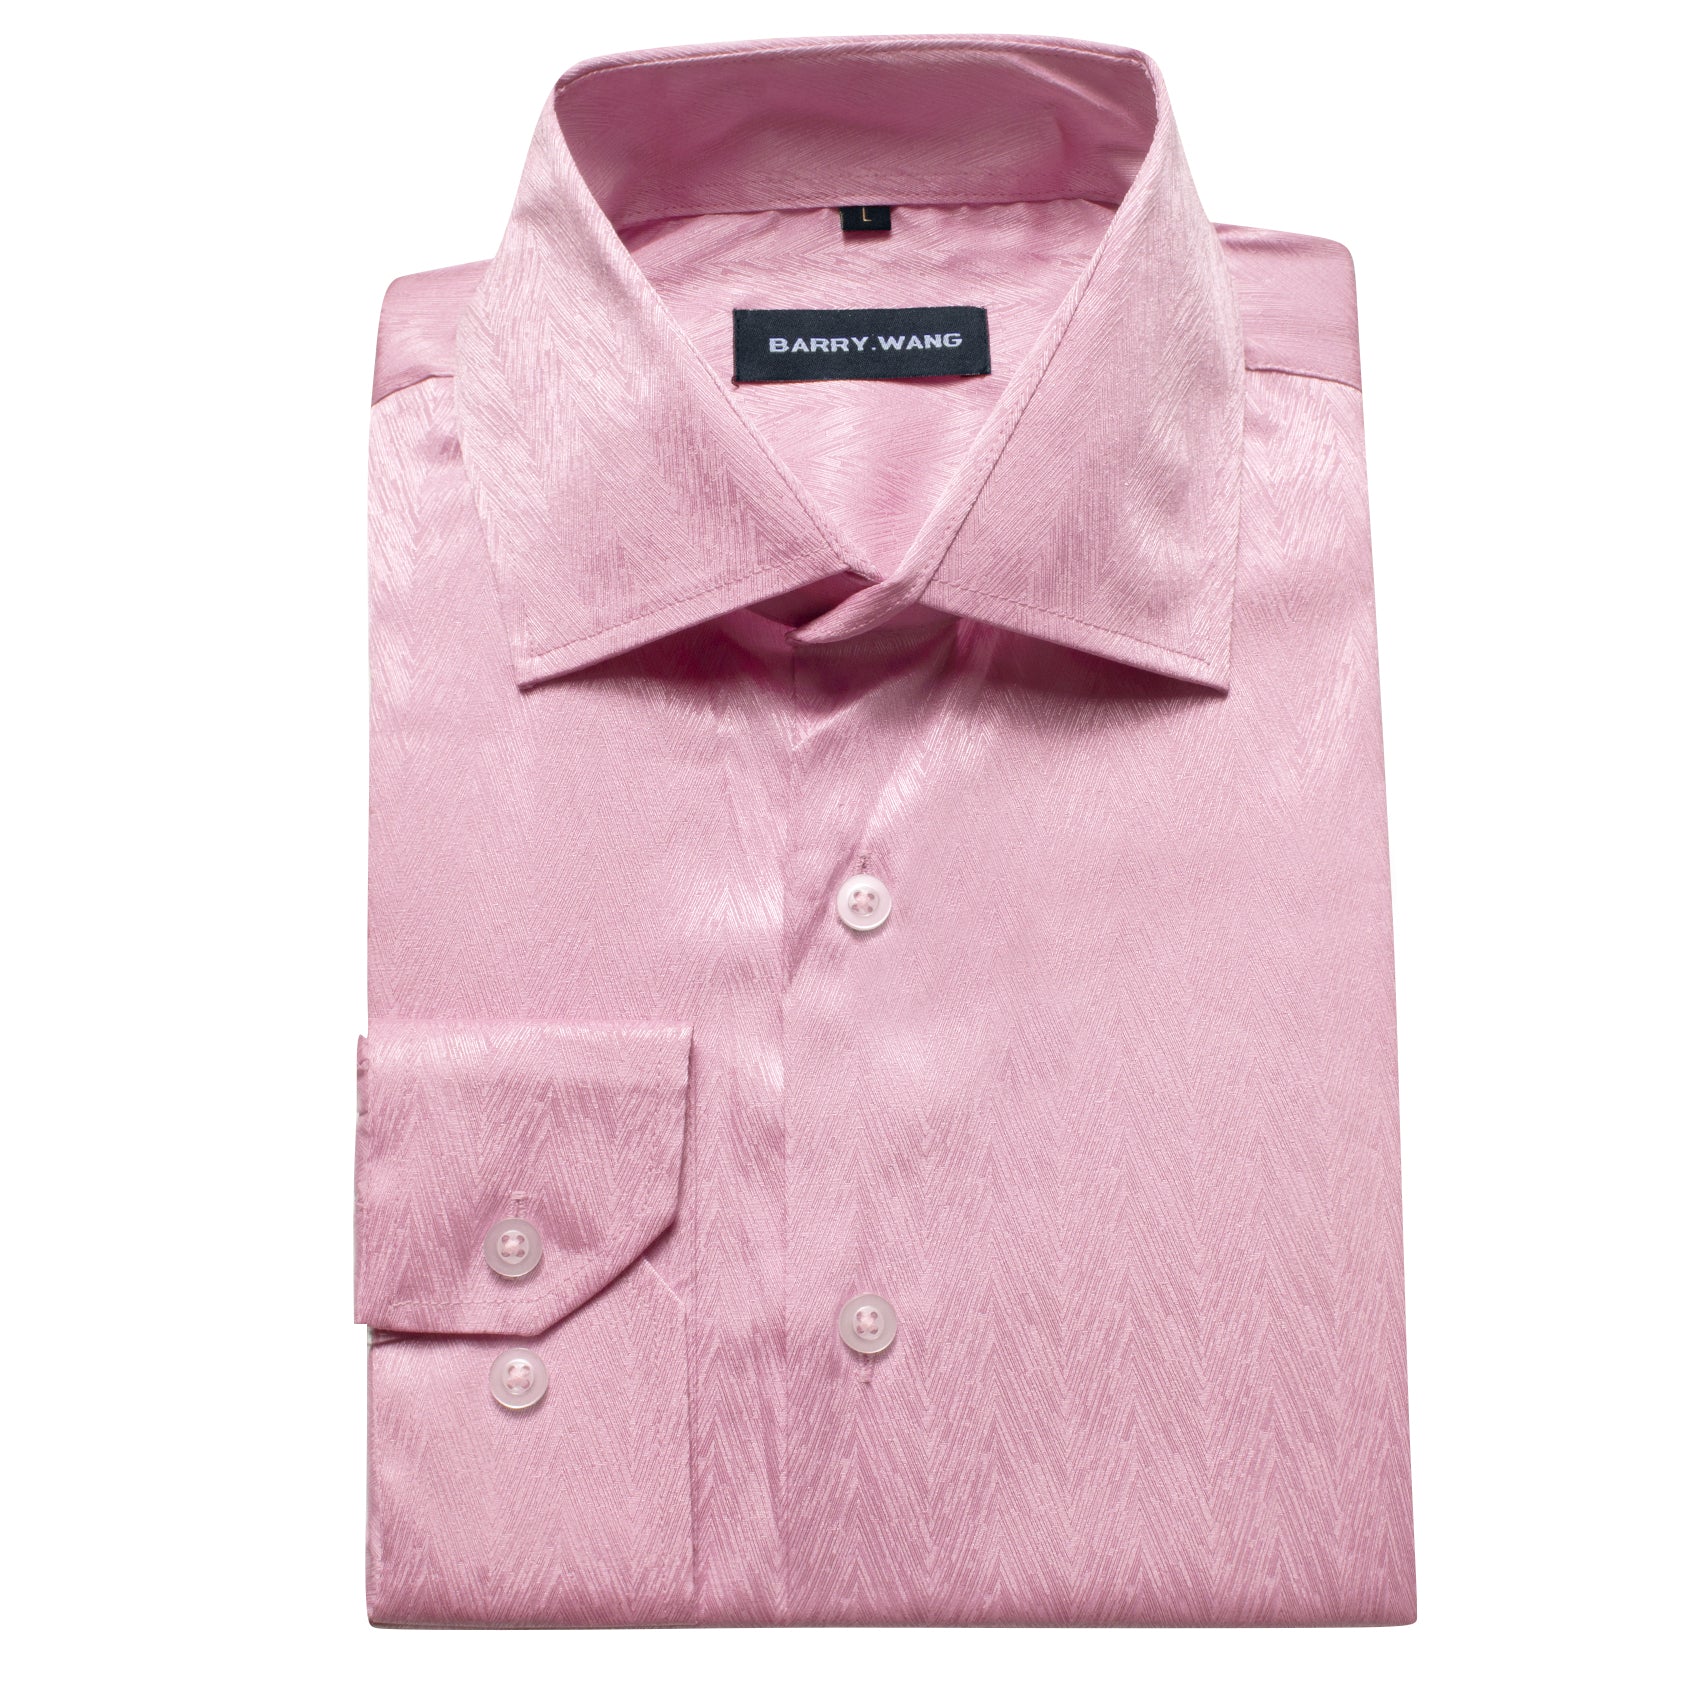 Barry.wang Fashion Light Pink Solid Silk Shirt